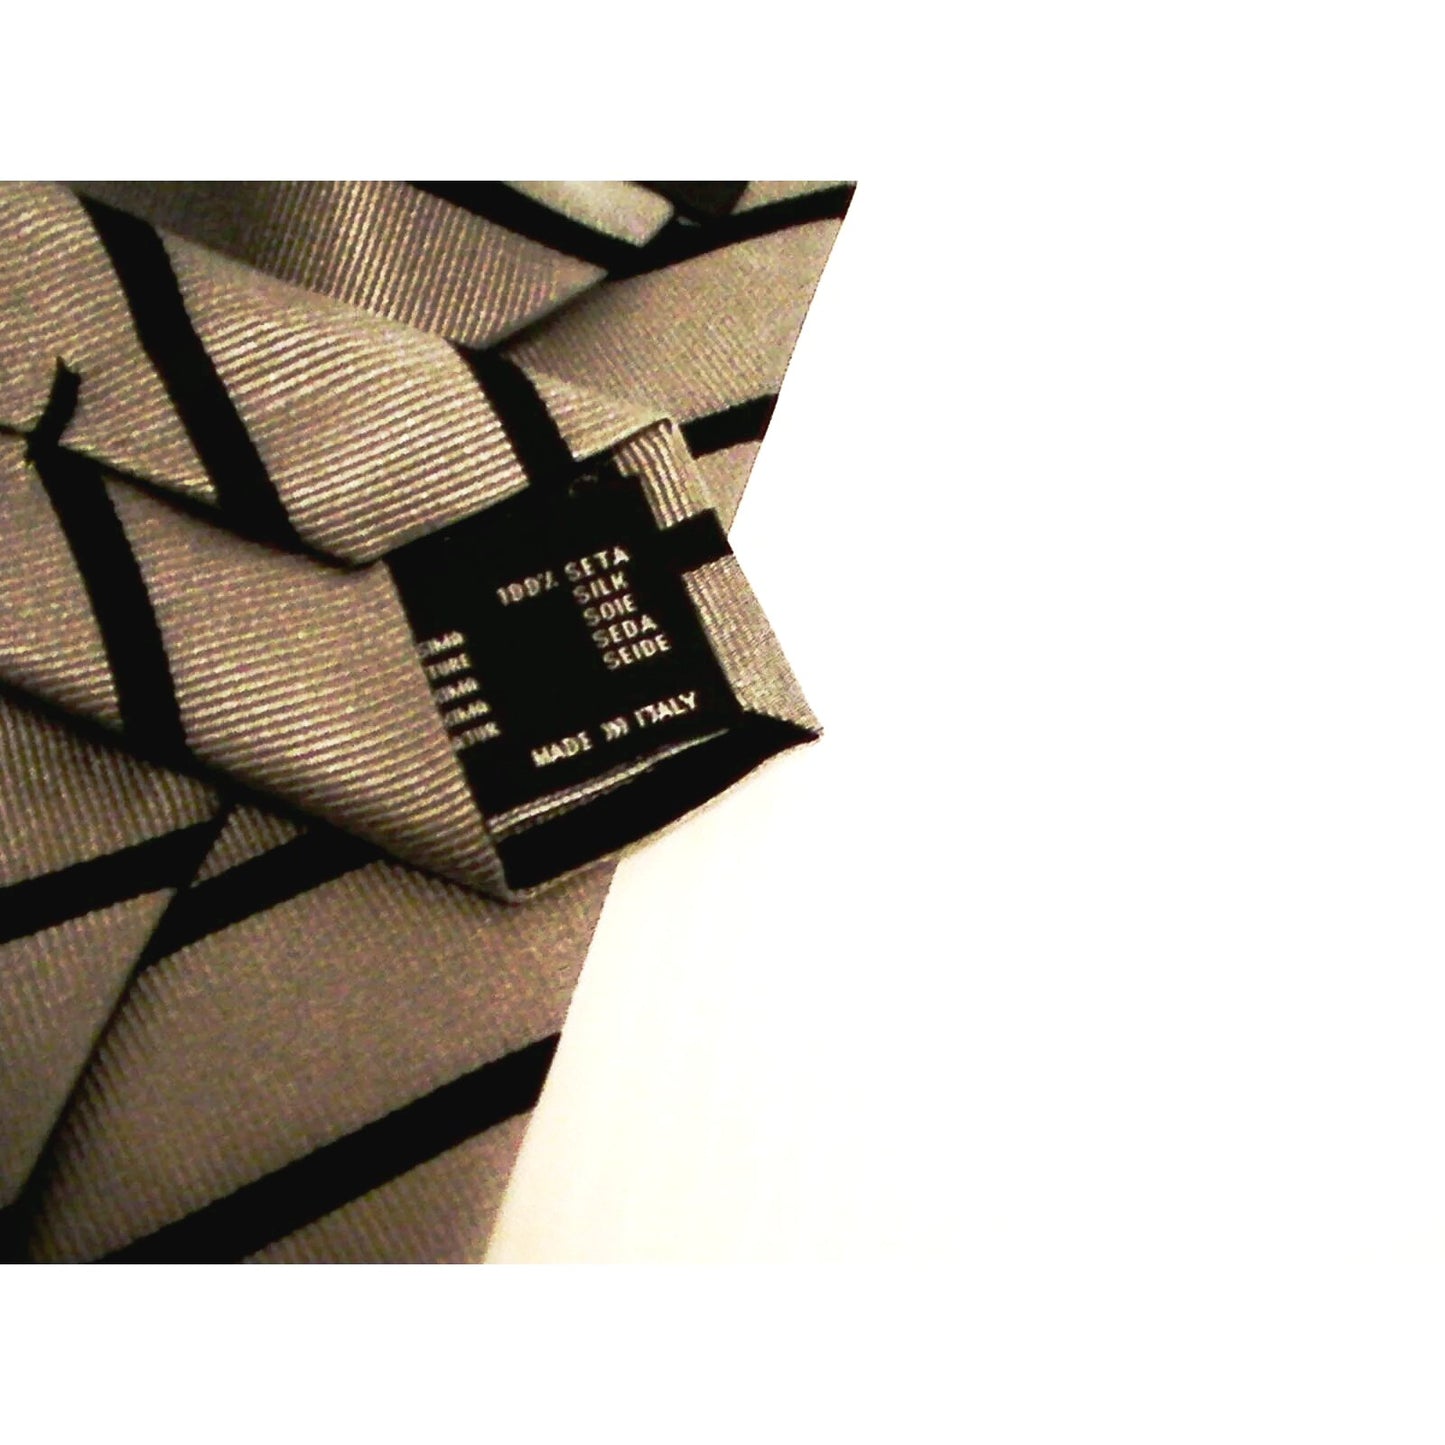 GIANNI VERSACE TIE MEDUSA Men's classic 100% silk Grey & Black made in Italy - Classic Fashion DealsGIANNI VERSACE TIE MEDUSA Men's classic 100% silk Grey & Black made in ItalytieVersaceClassic Fashion DealsGIANNI VERSACE TIE MEDUSA Men's classic 100% silk Grey & Black made in Italy